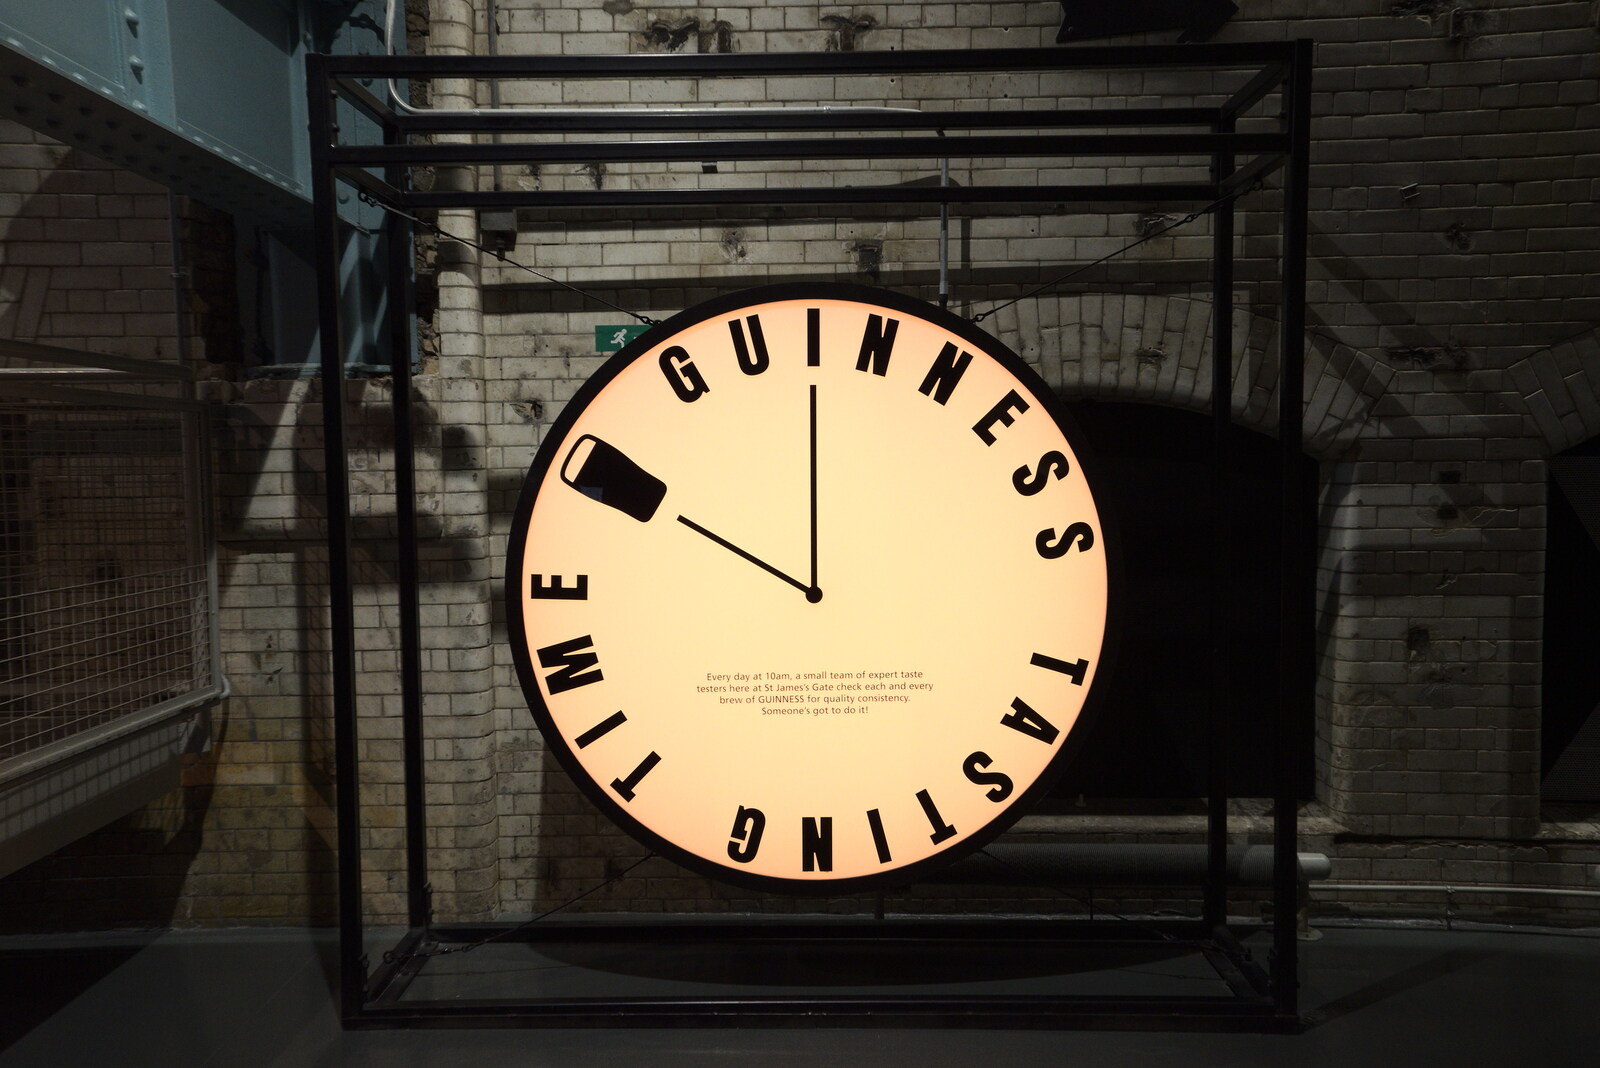 Guinness Tasting Time clock from The Guinness Storehouse Tour, St. James's Gate, Dublin, Ireland - 17th August 2021